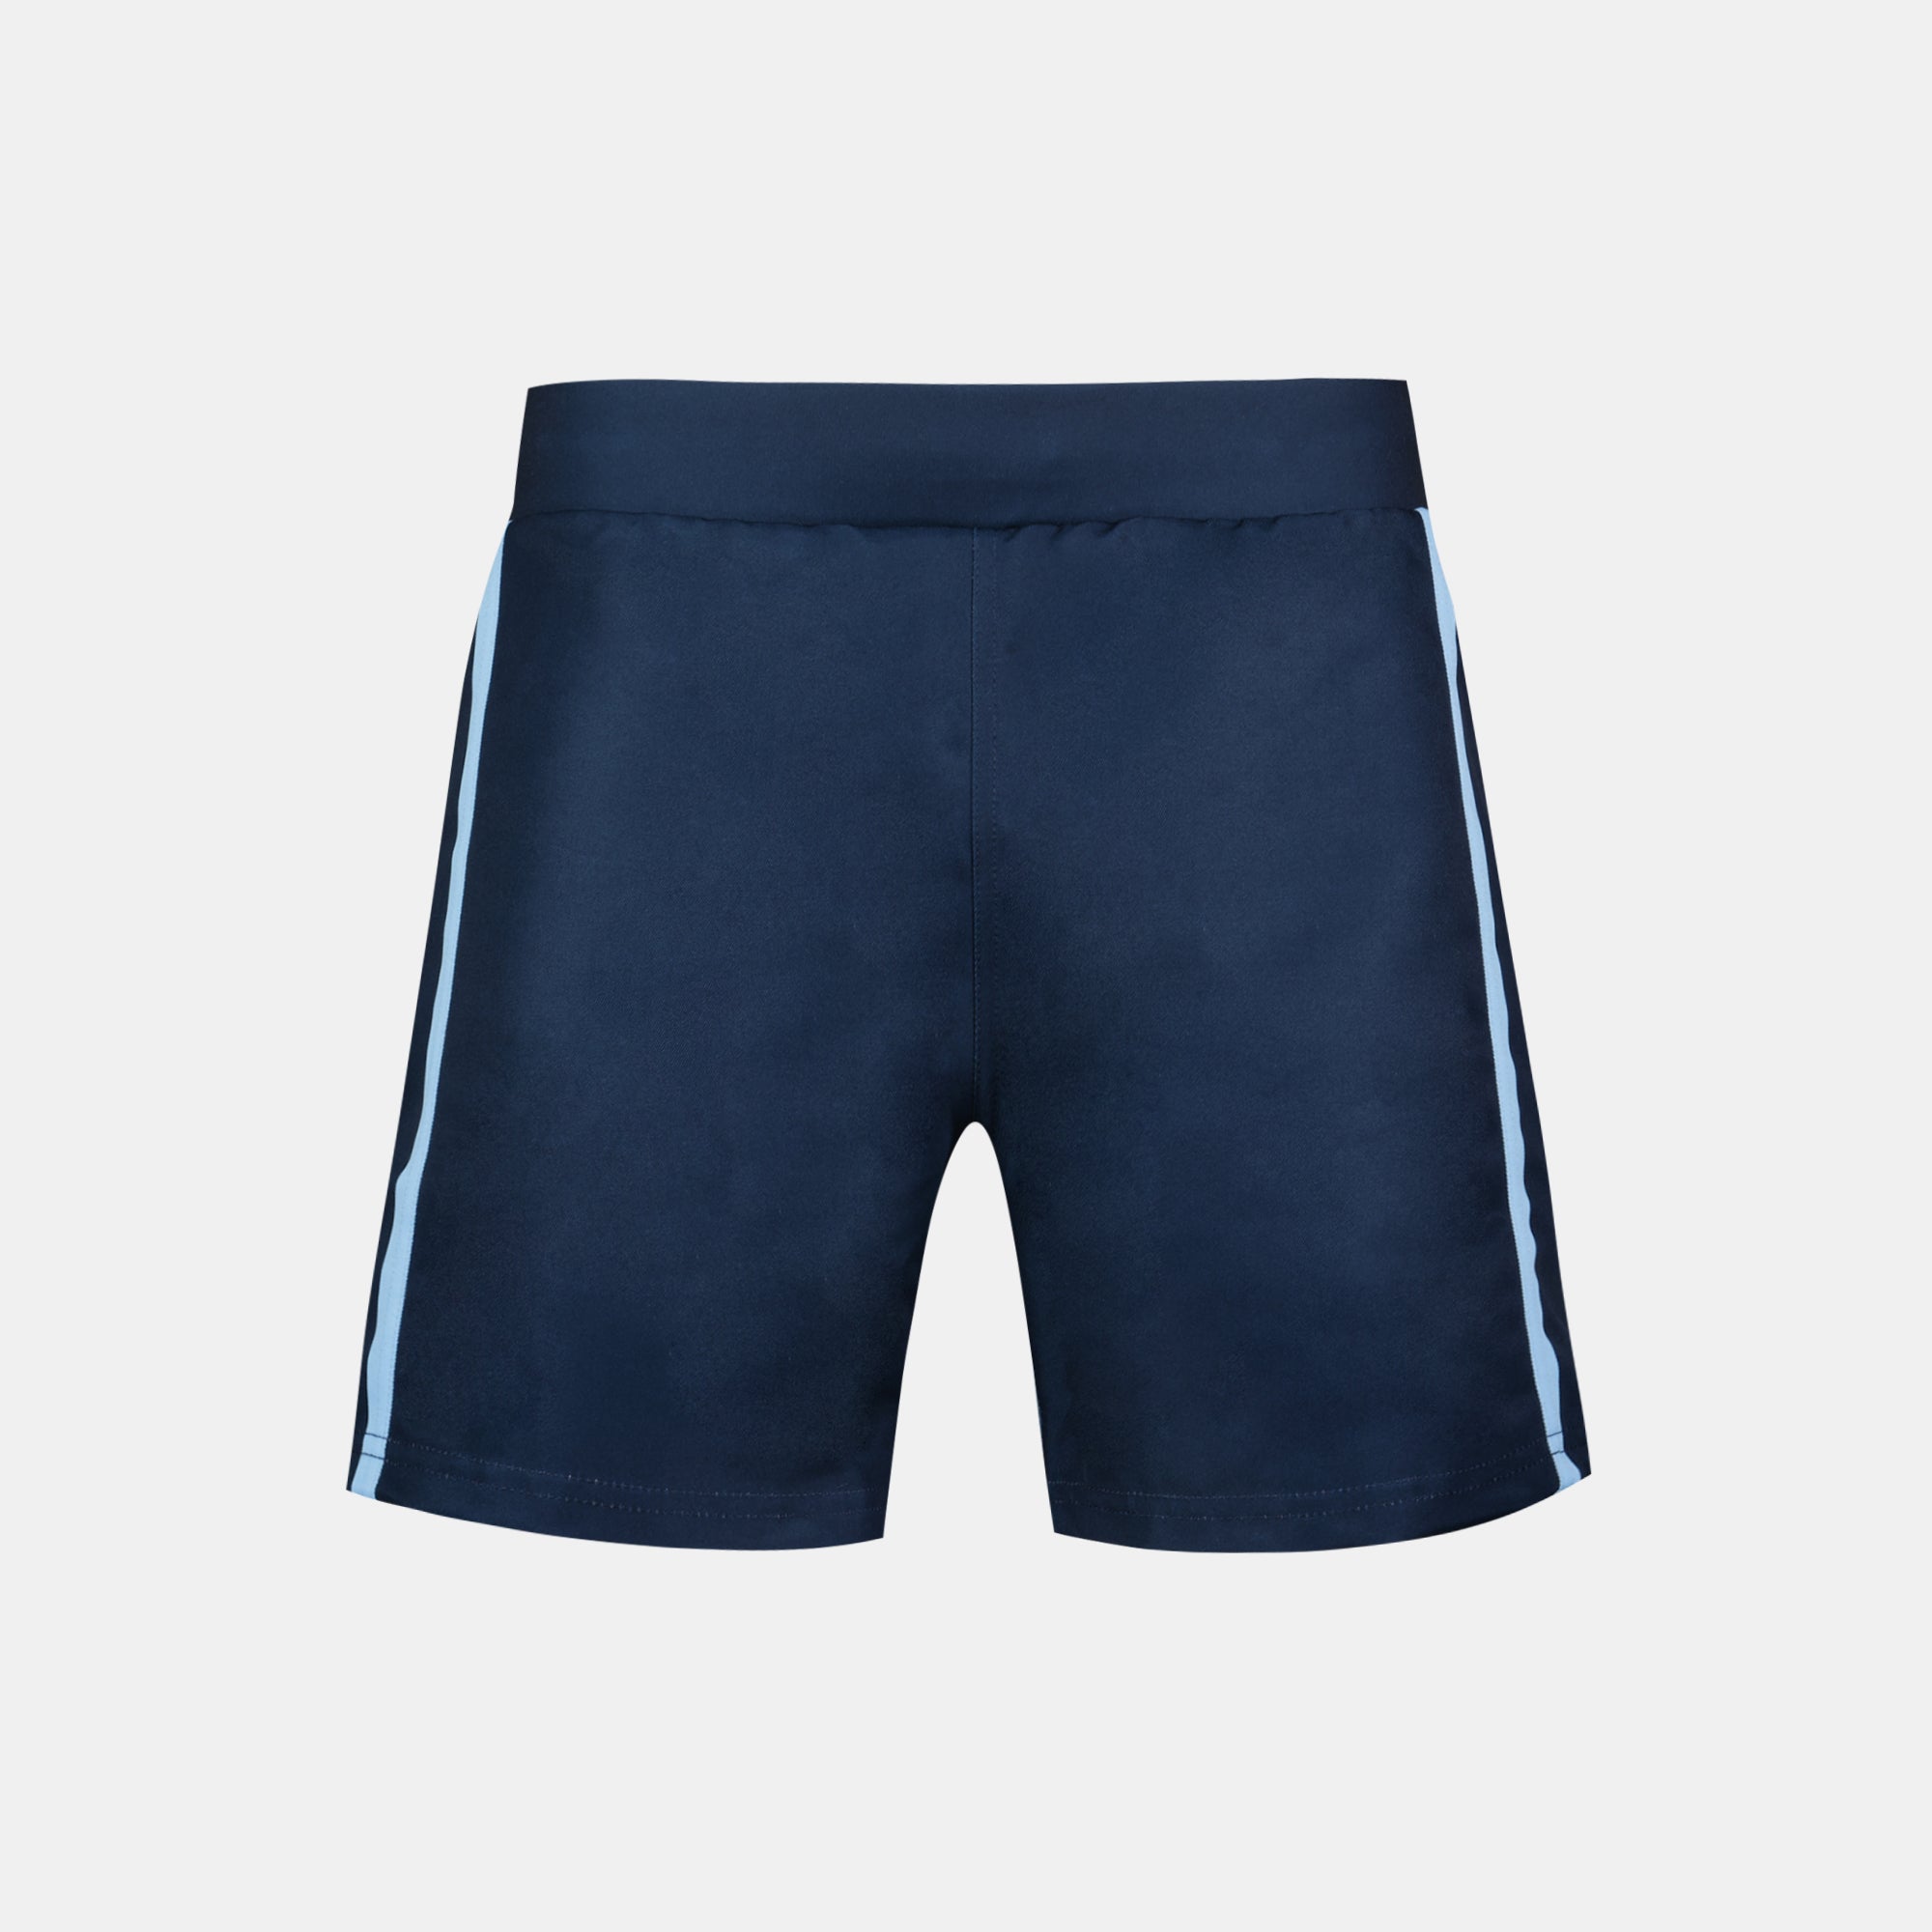 2422765-AB REPLICA Short M blue navy  | Shorts for men